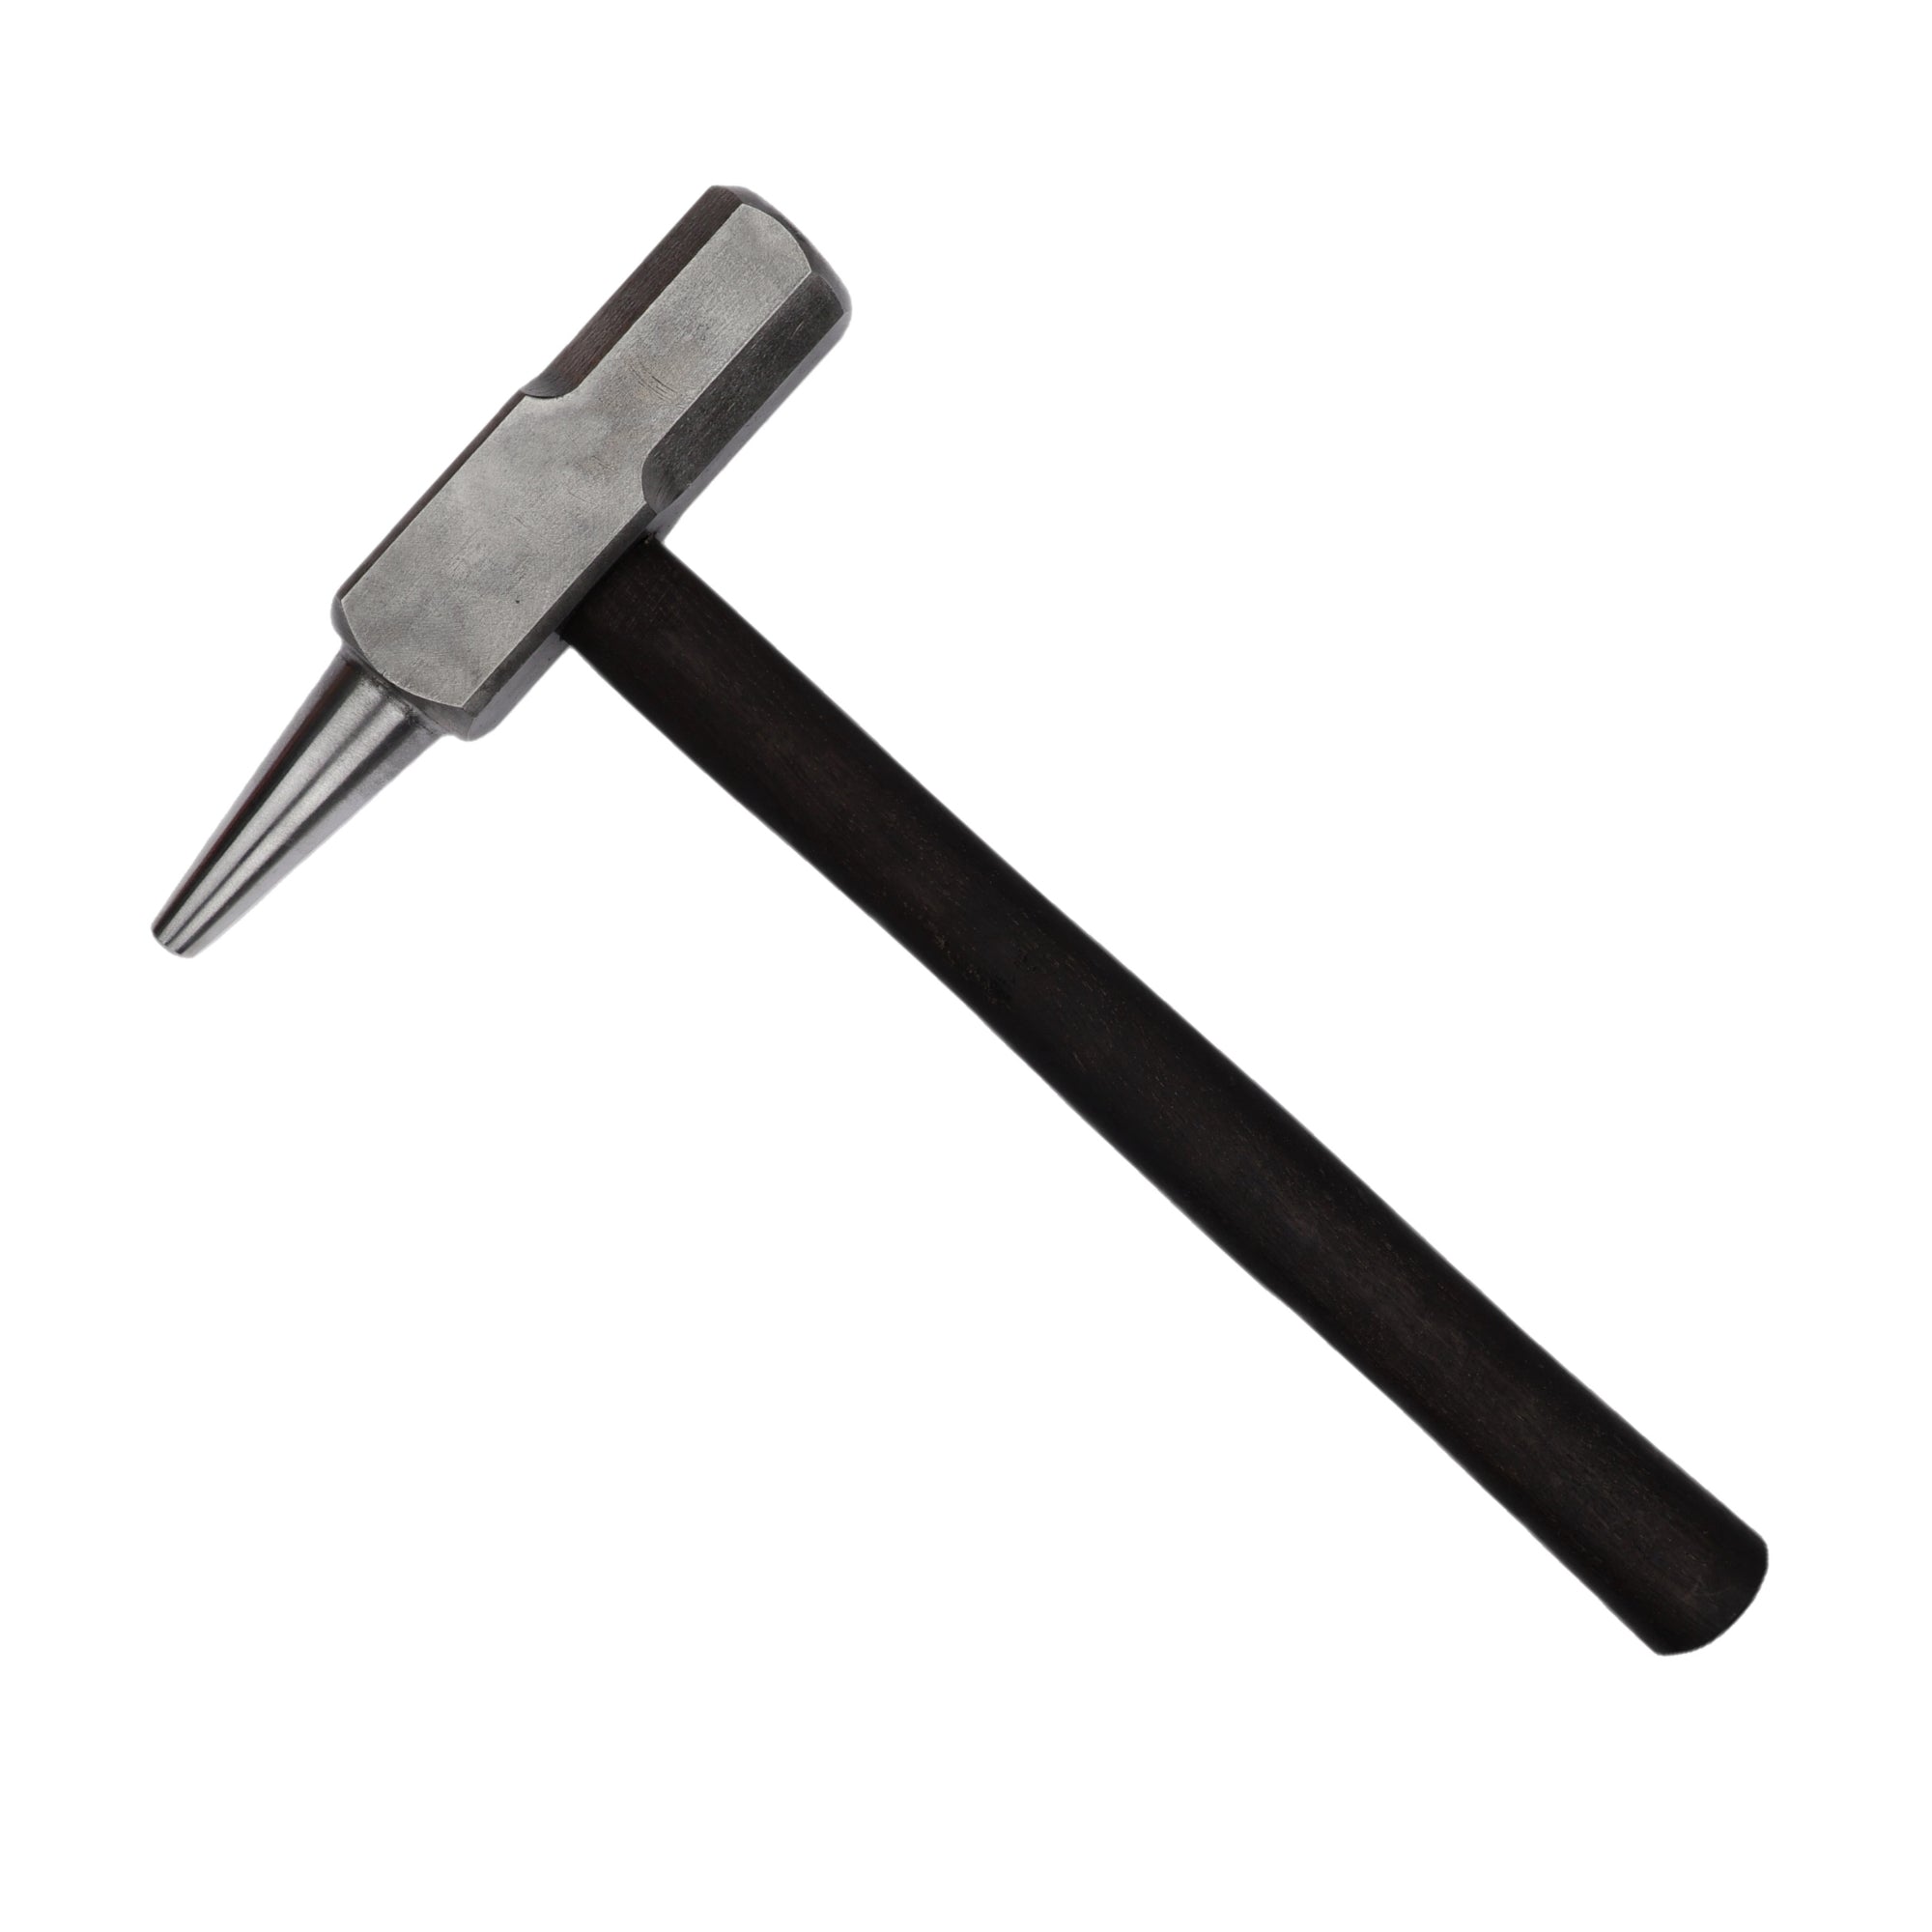 Hot Punch Circle Hammer Drift for Blacksmiting 2.2 lbs